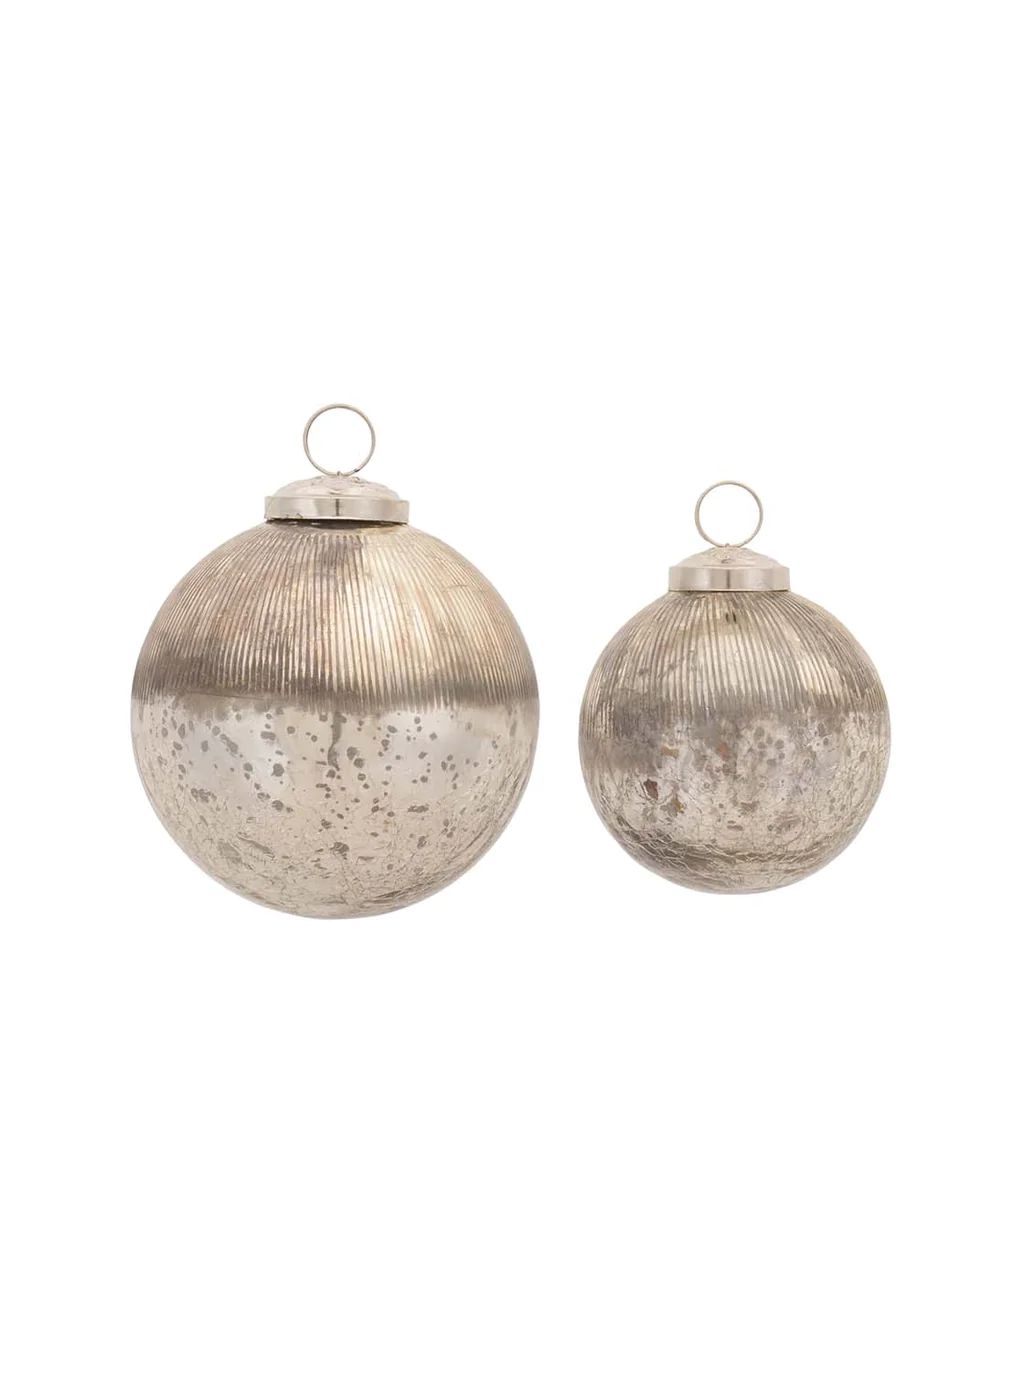 Mercury Ball Ornaments | Set of 2 | House of Jade Home